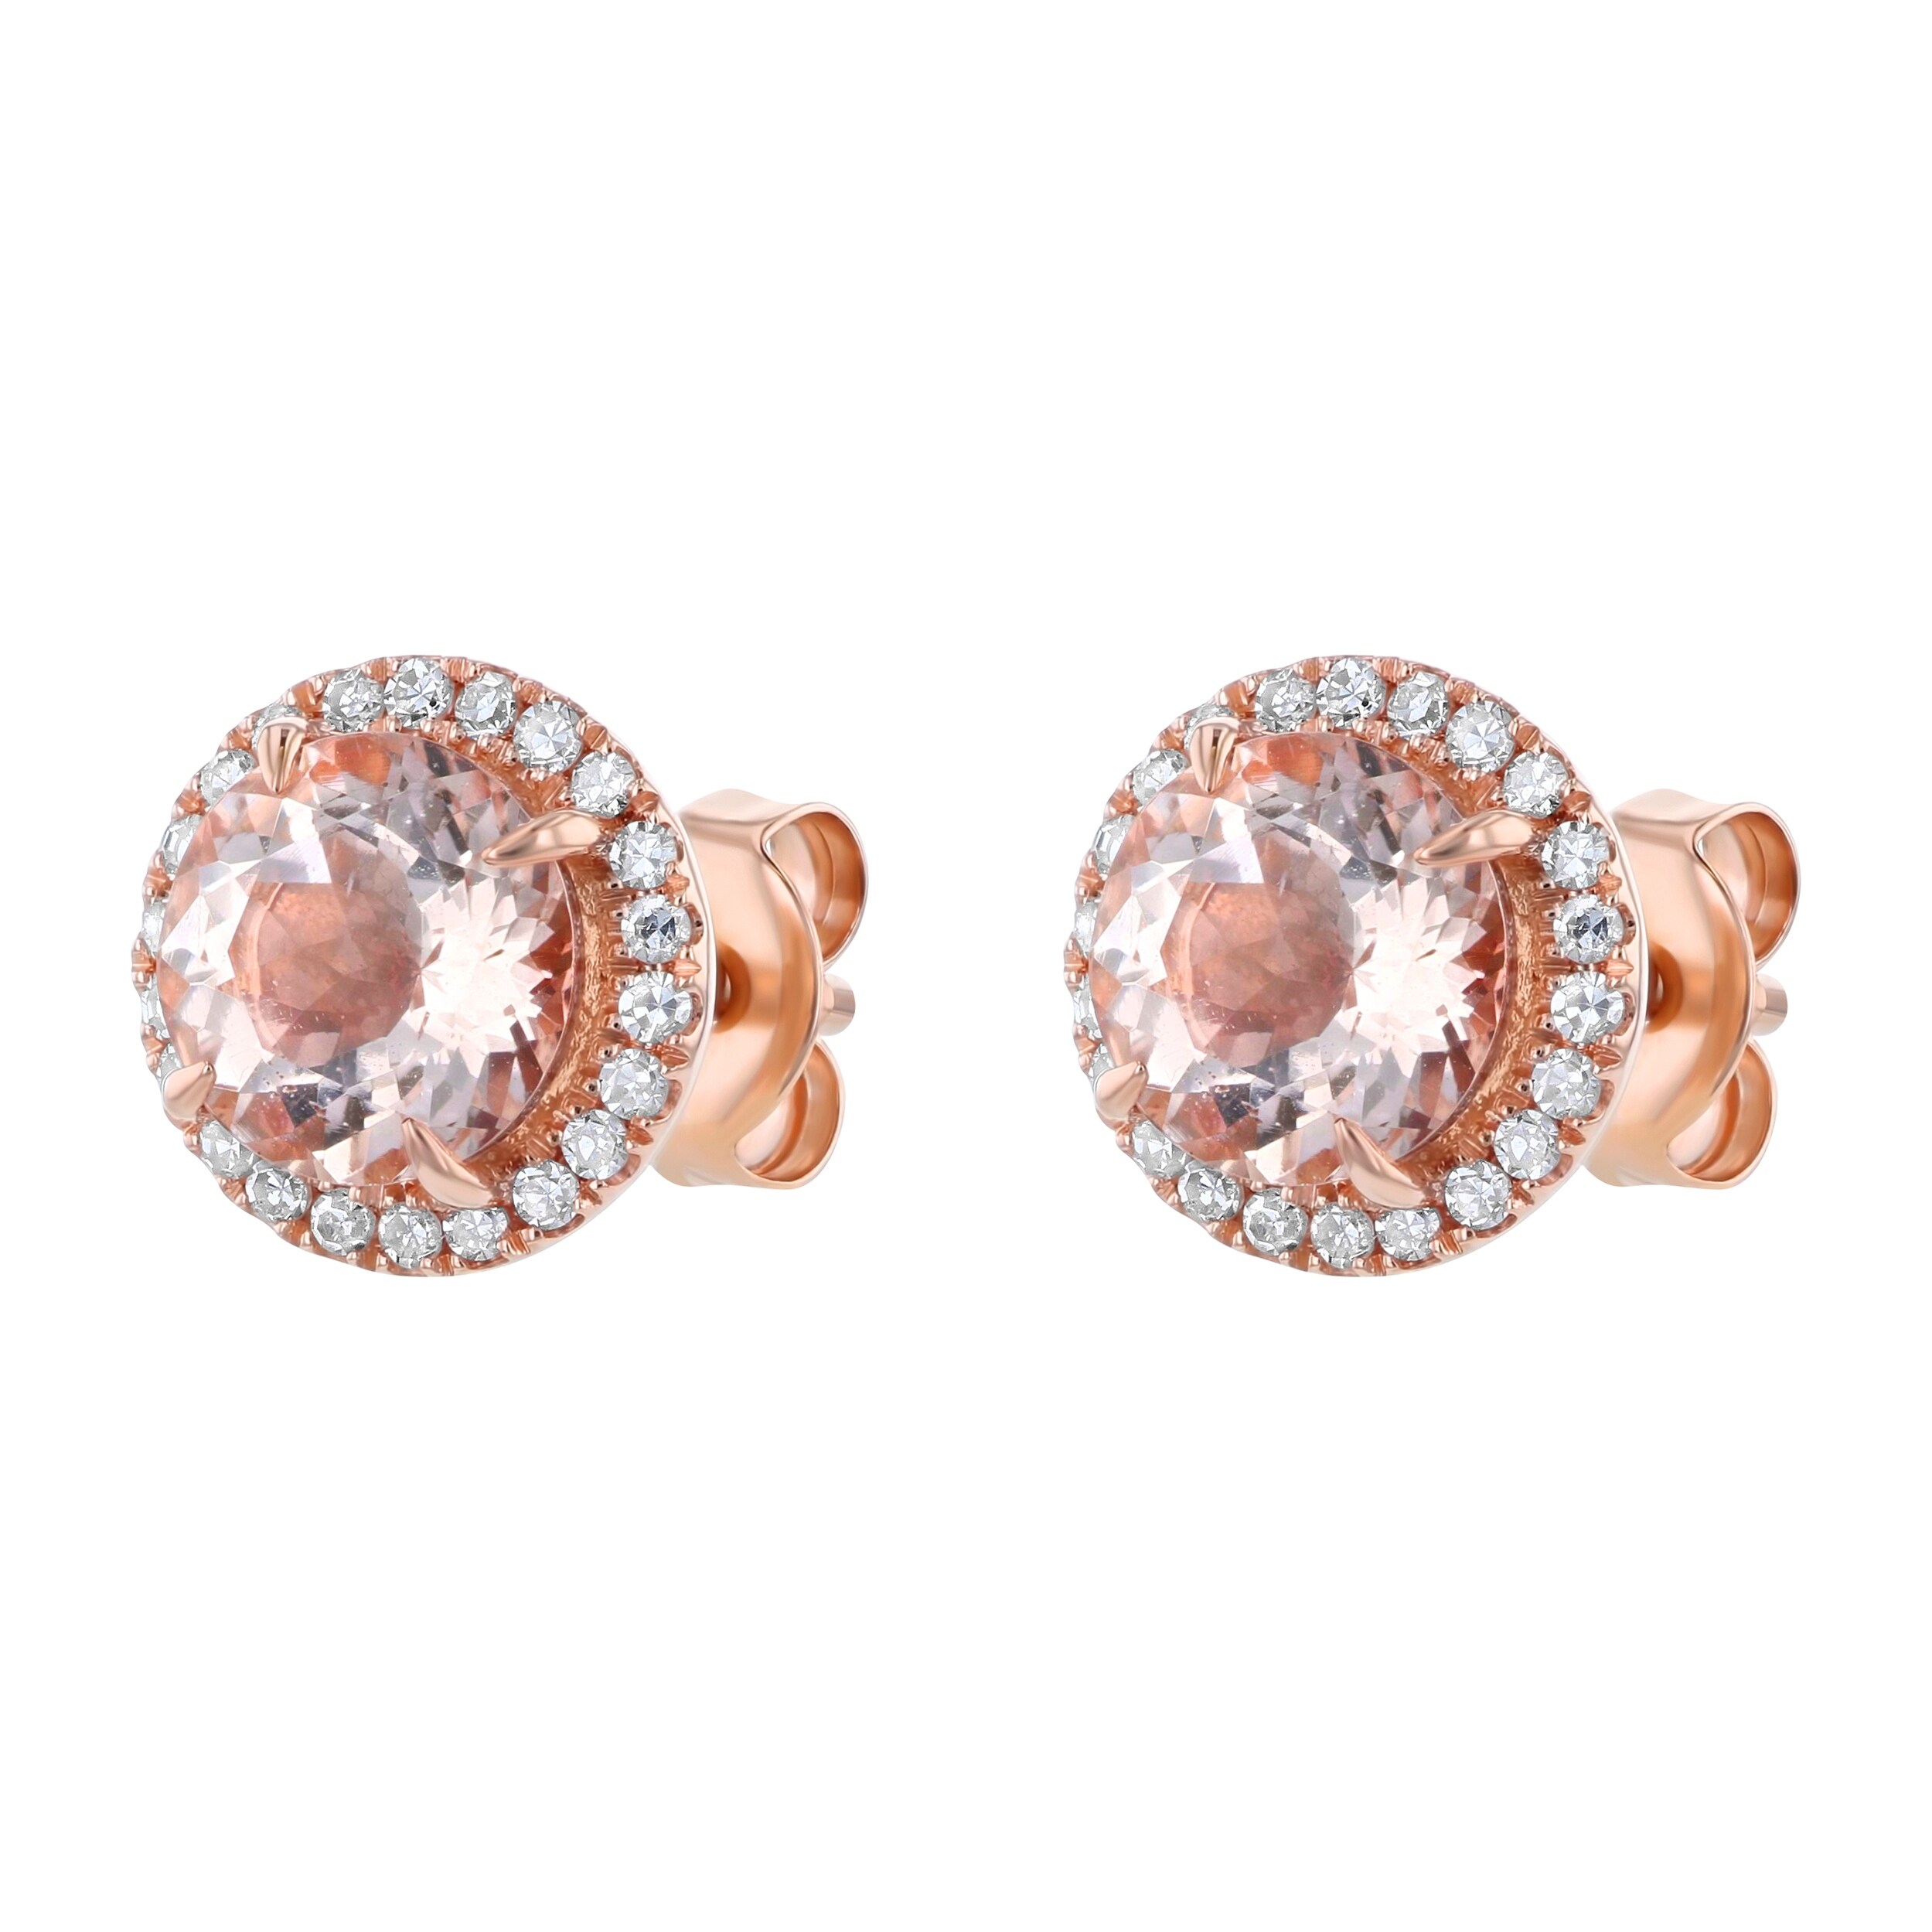 2Ct Oval Cut Peach Morganite & Diamond Halo Stud Earrings 14k Rose Gold Finish 